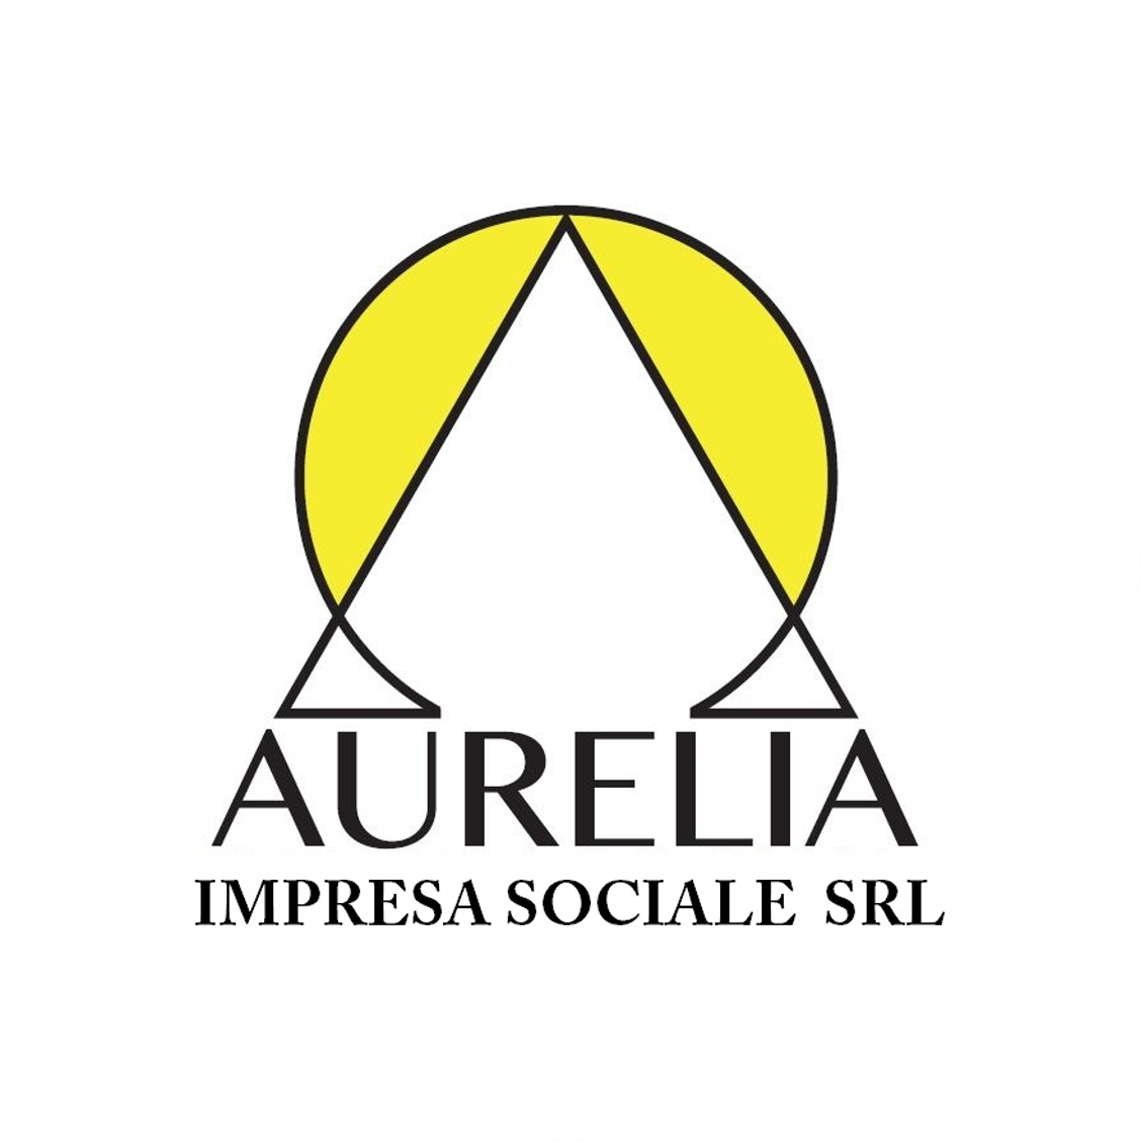 Aurelia Impresa Sociale srl